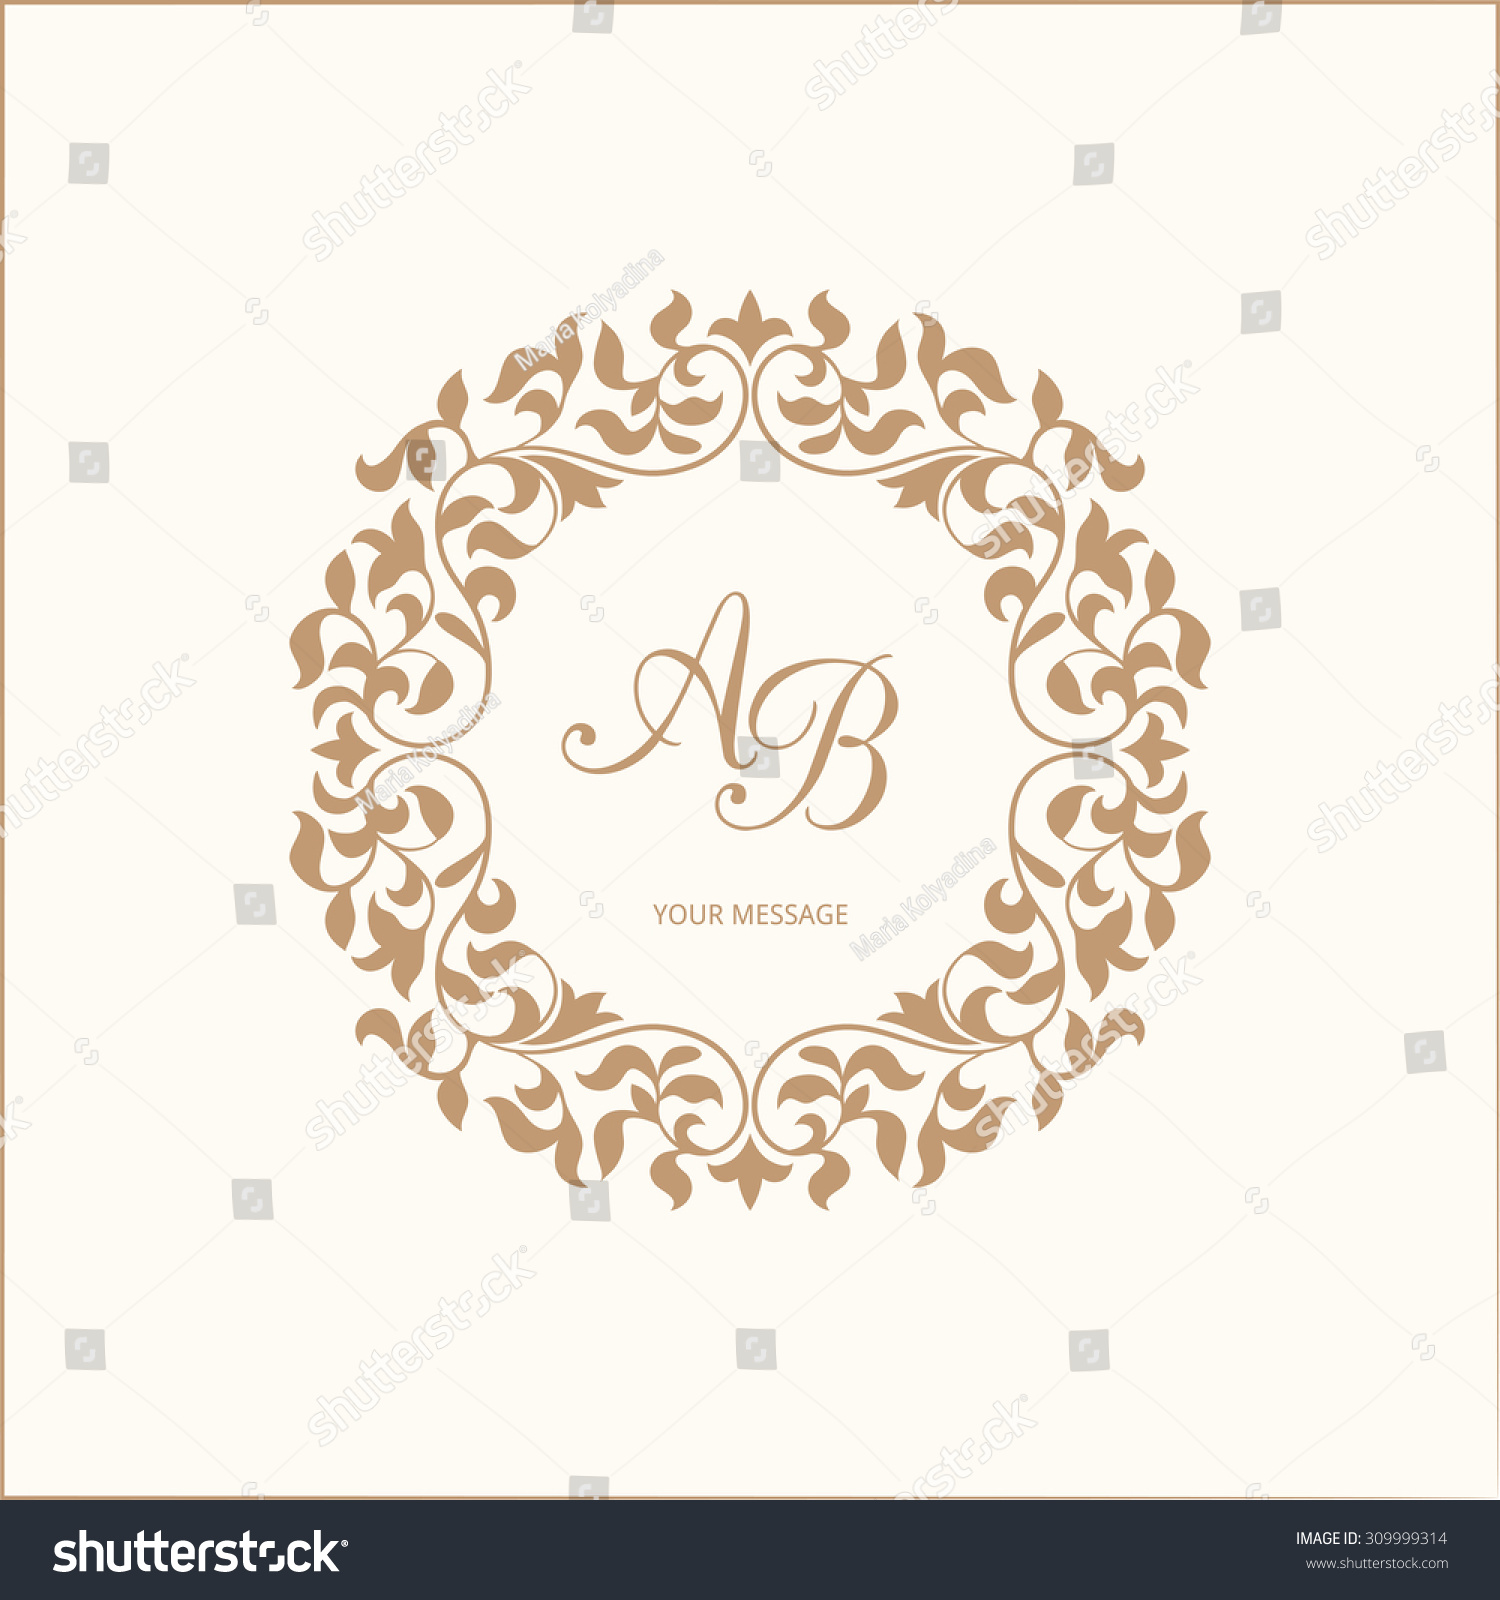 stock-vector-elegant-floral-monogram-design-template-for-one-or-two-letters-wedding-monogram-calligraphic-309999314.jpg